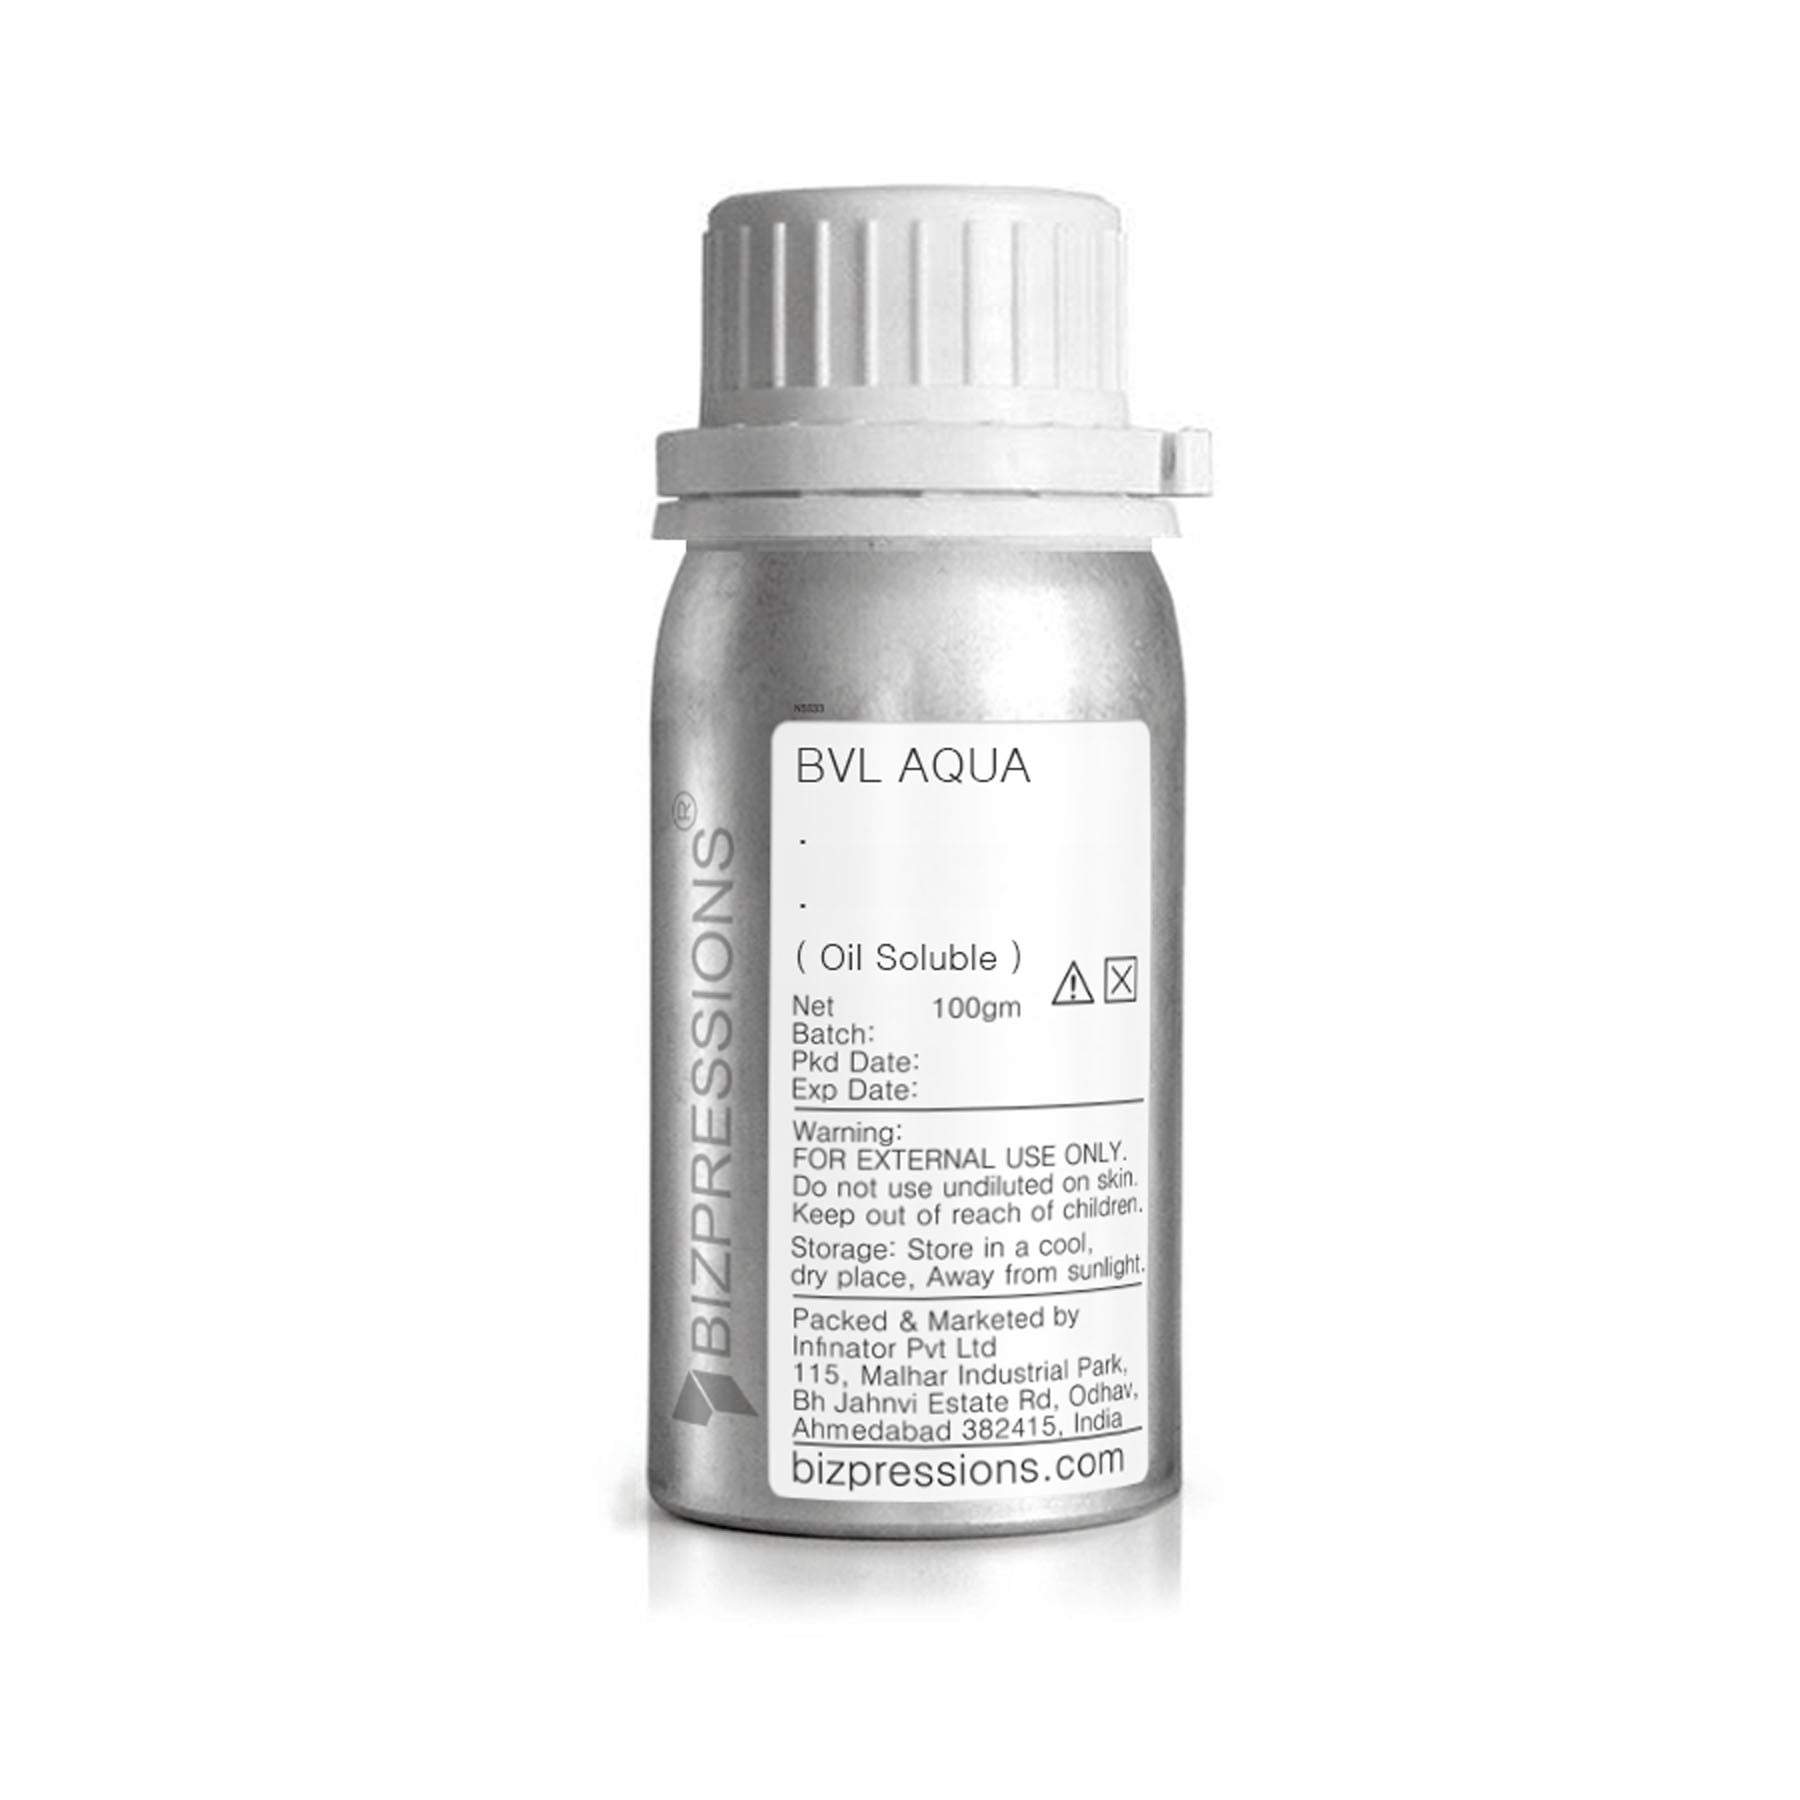 BVL AQUA - Fragrance ( Oil Soluble ) - 100 gm